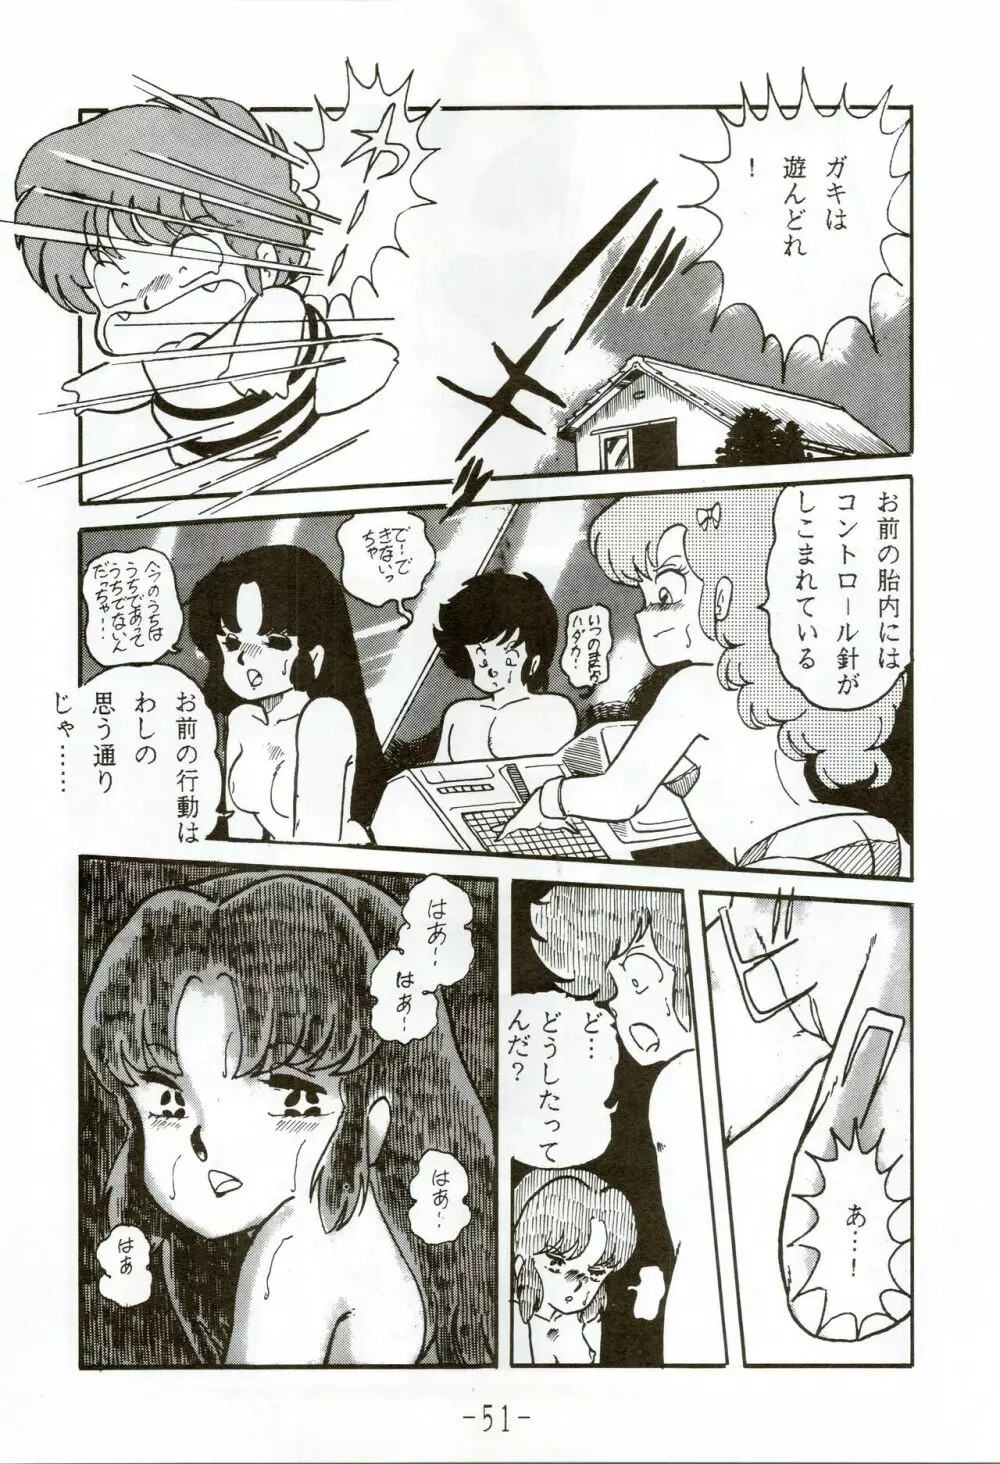 甲冑伝説 - page51